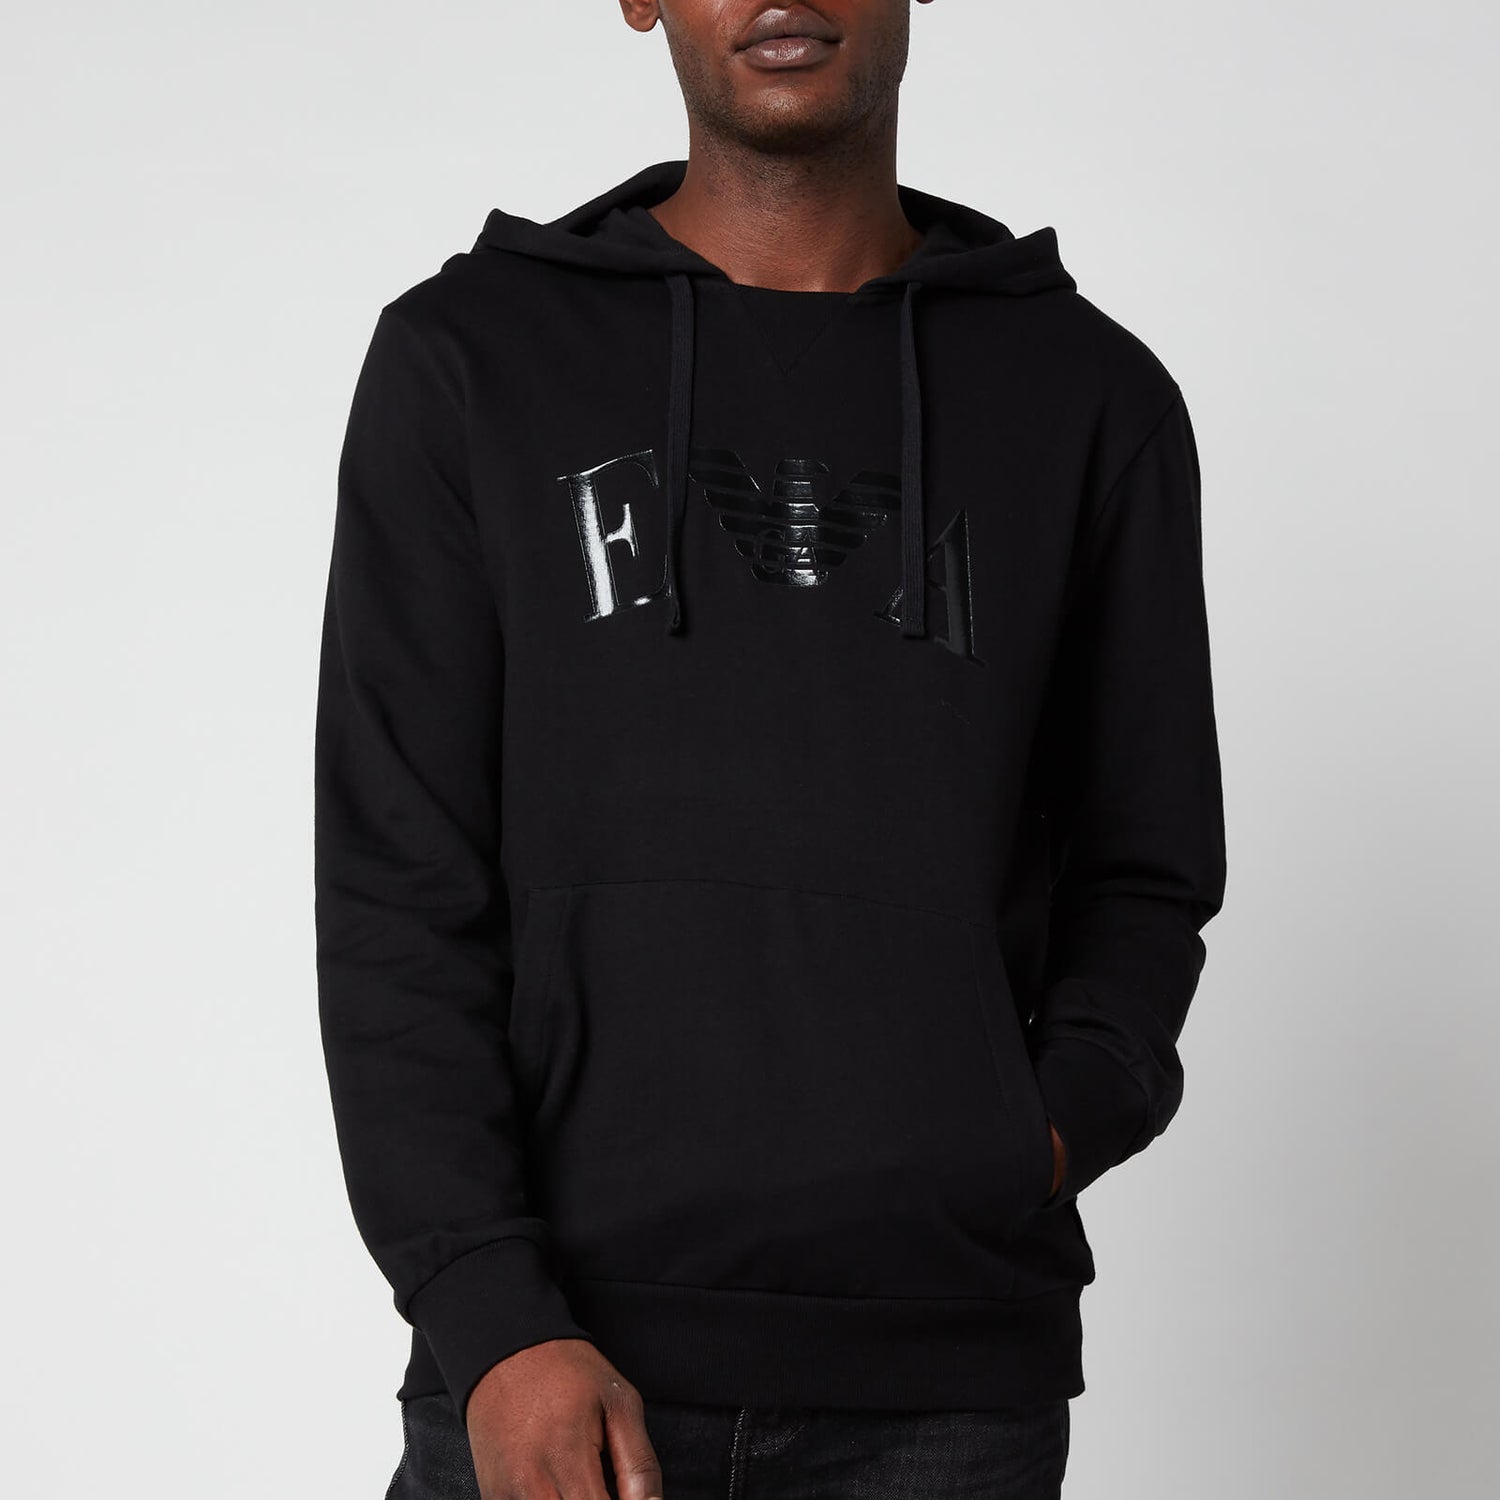 Emporio Armani Men's Iconic Terry Hooded Sweatshirt - Black